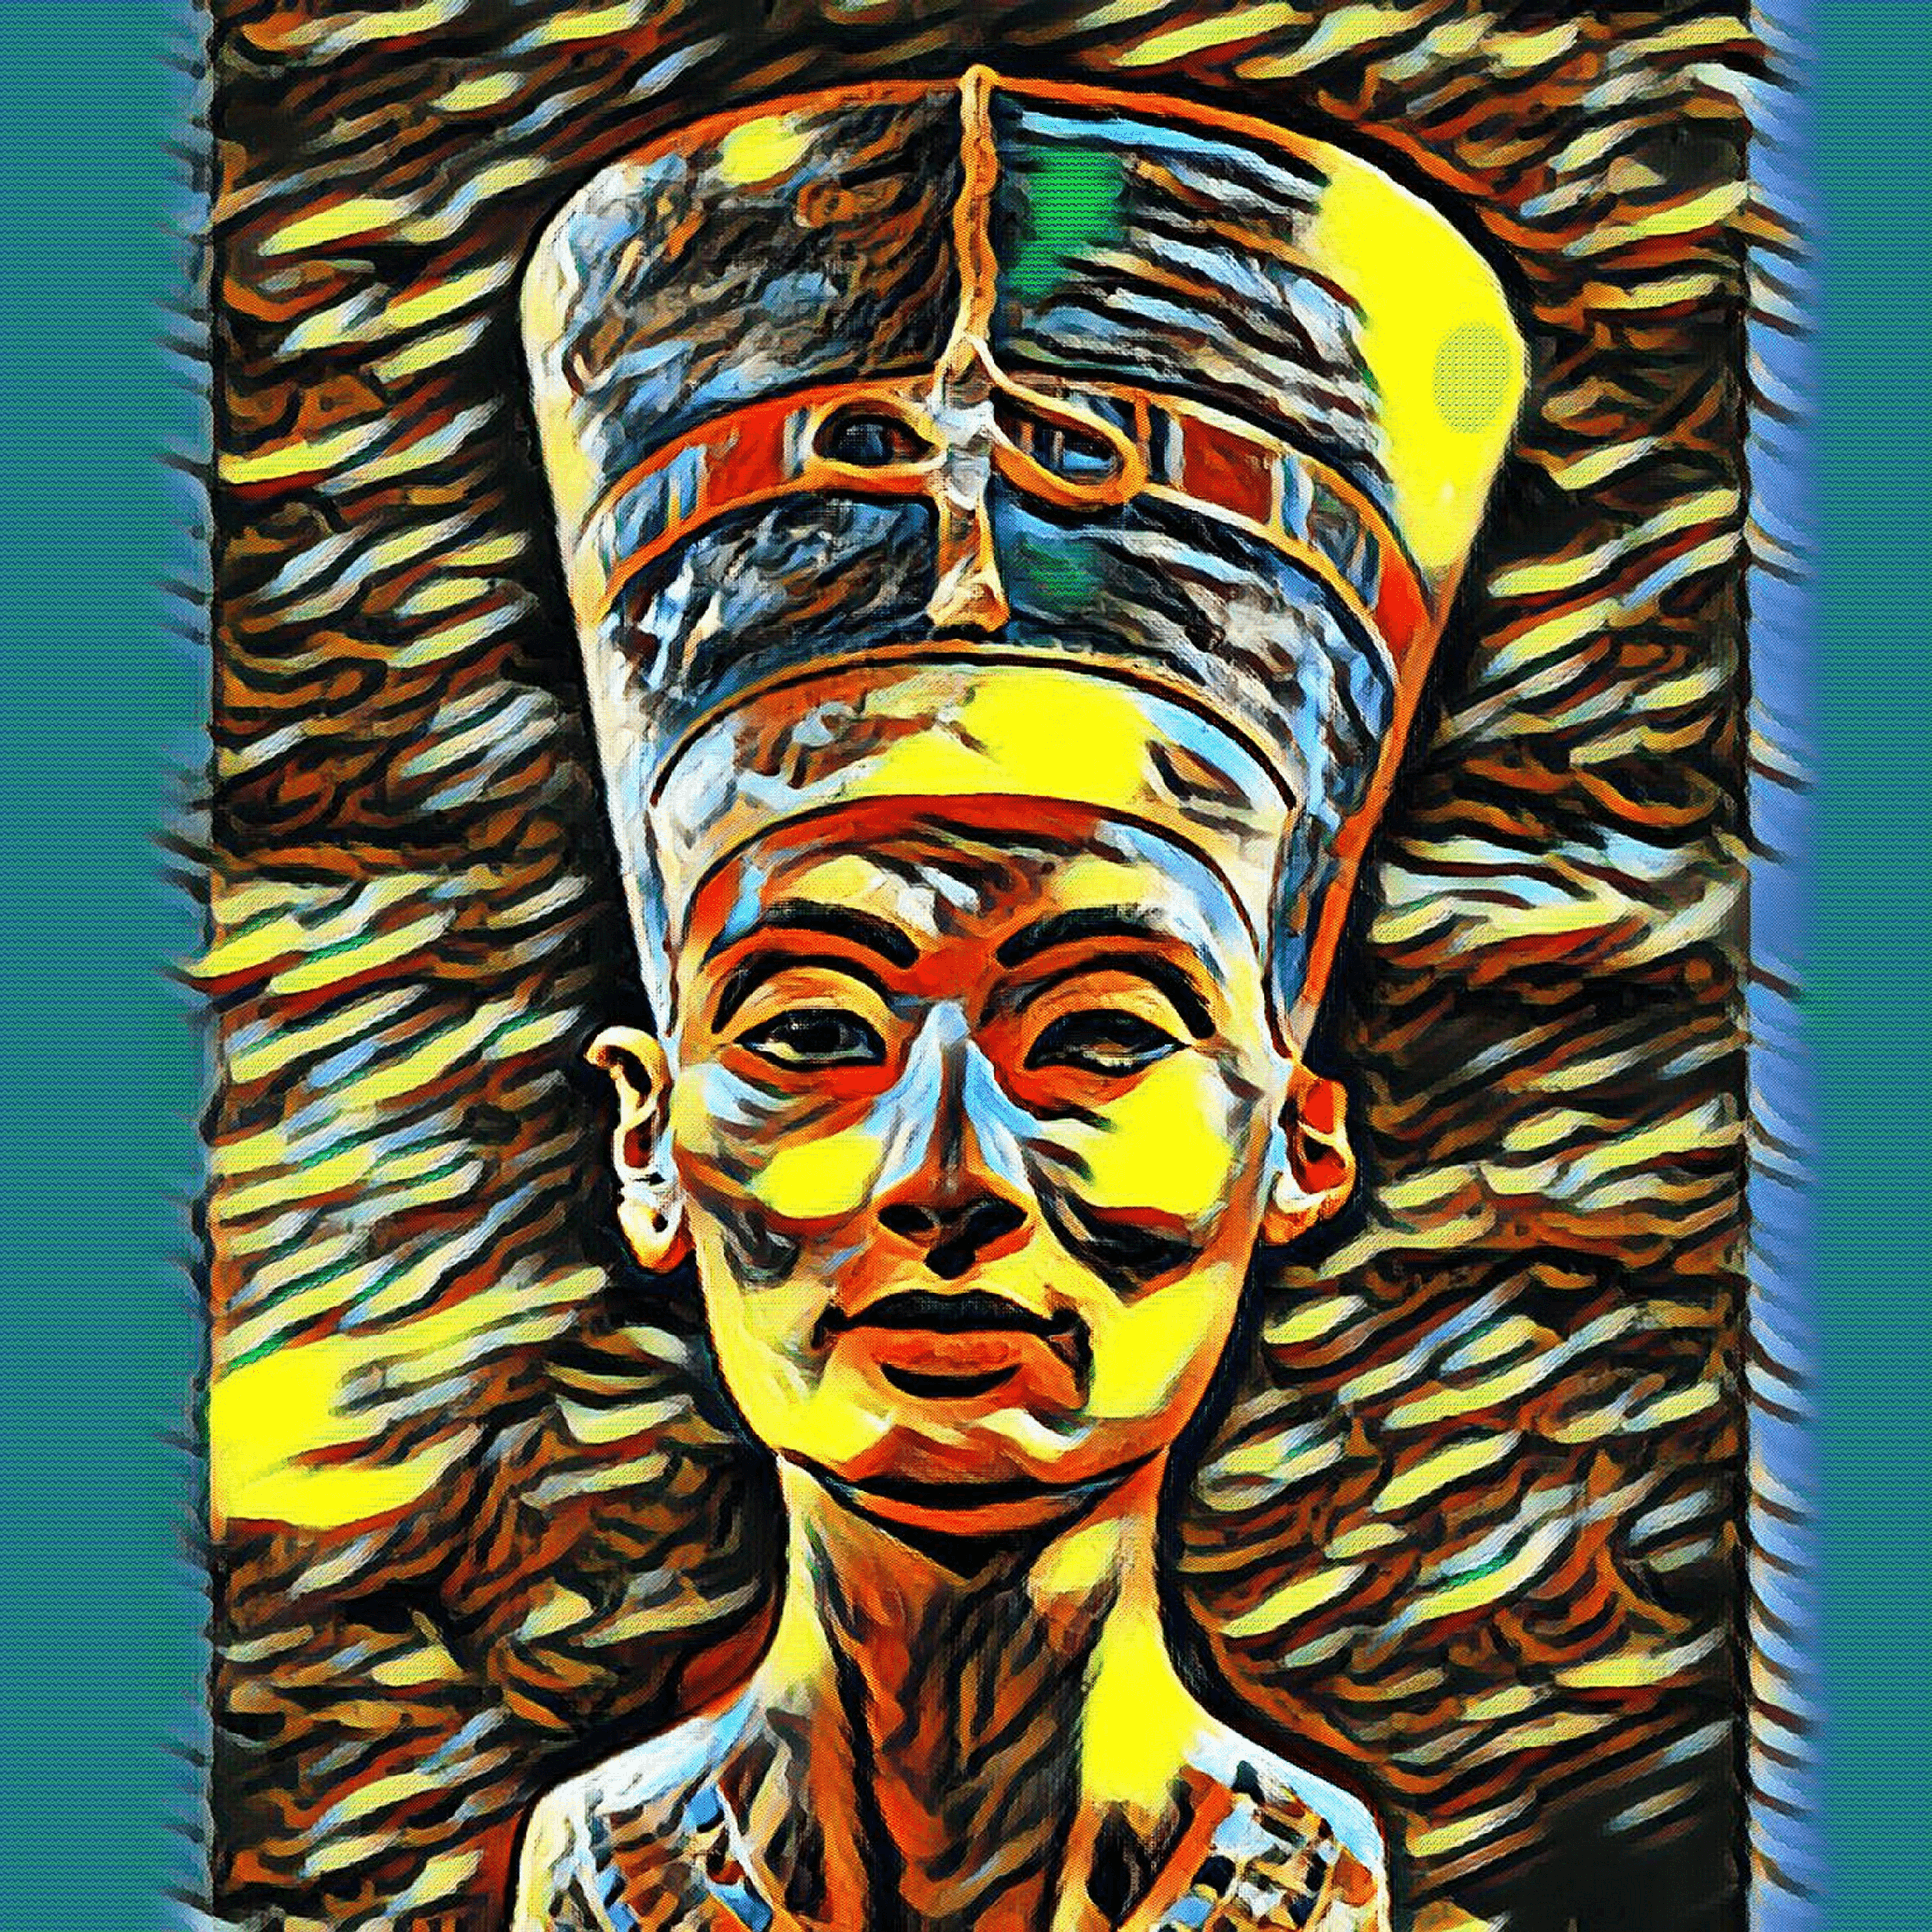 Nefertiti Egyptian Queen NFT Pop Art NFT by SOLLOG Limited Minting 10 Copies on Polygon Opensea